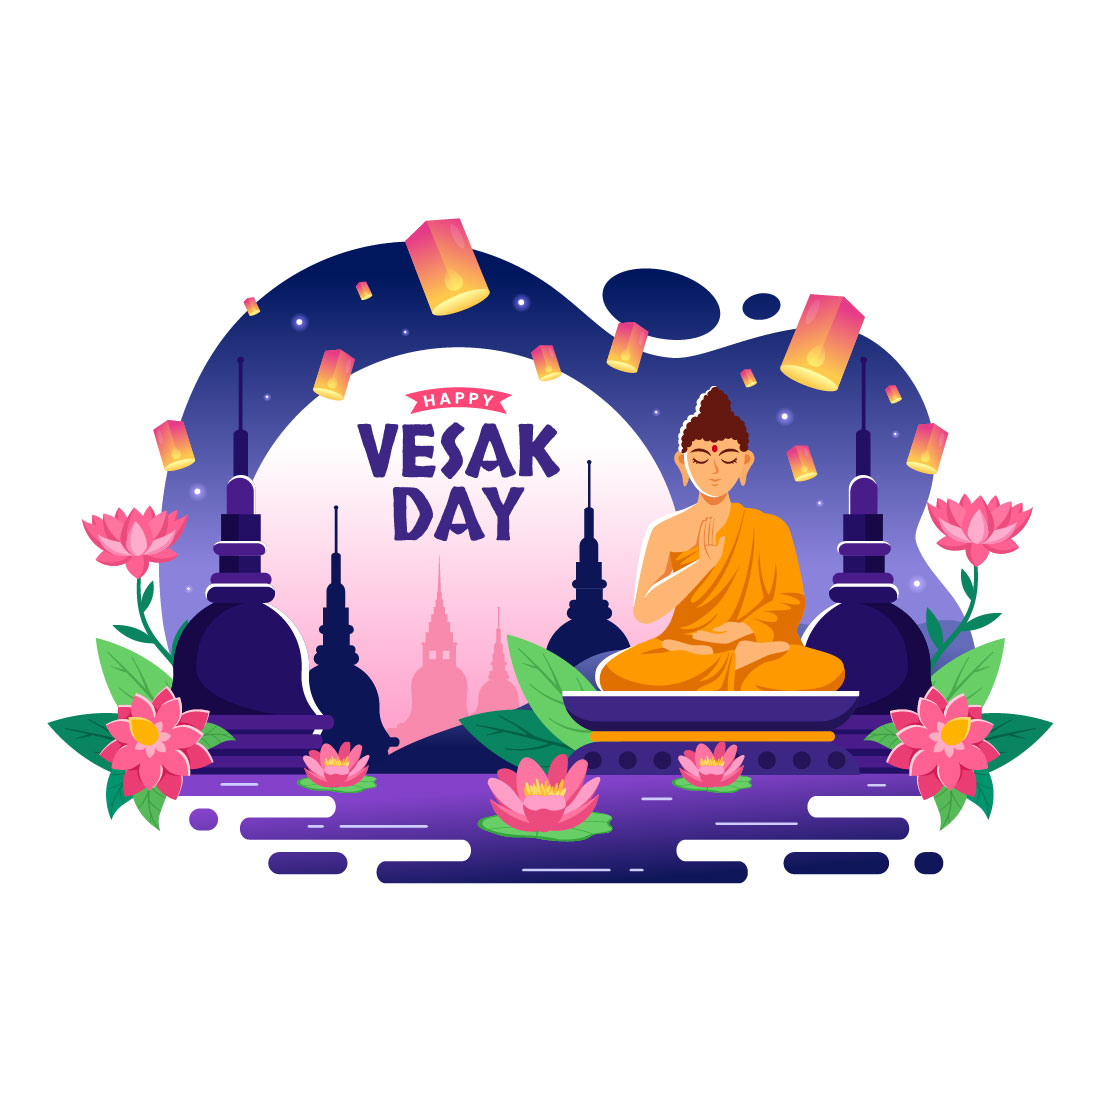 12 Vesak Day Celebration Illustration cover image.